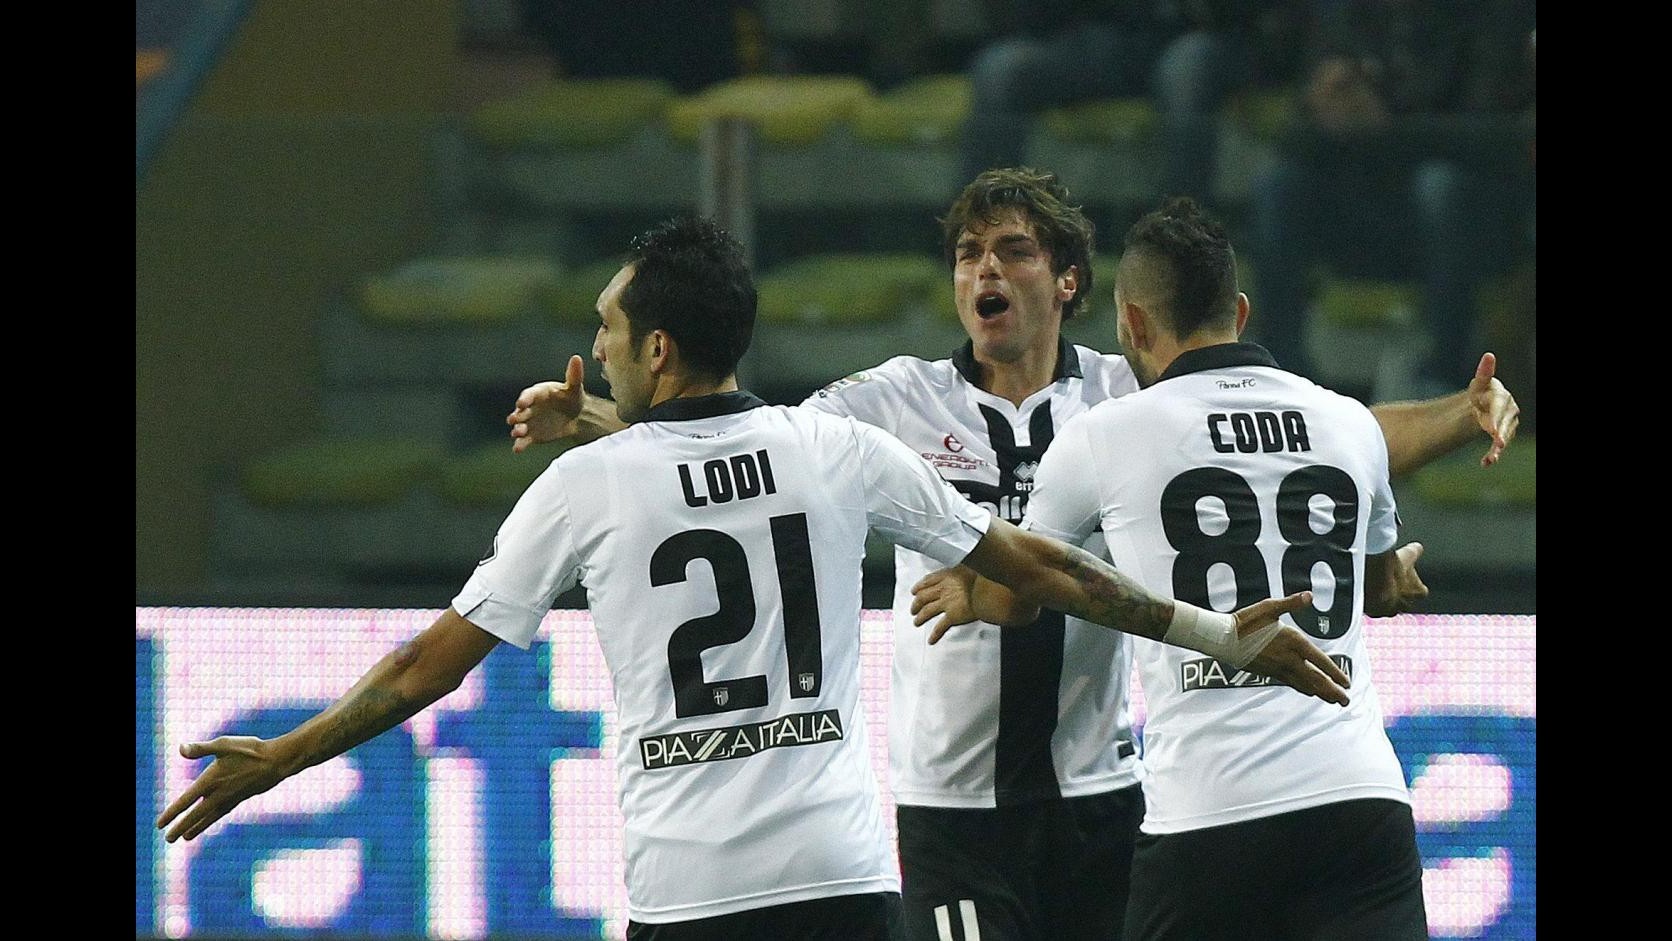 Serie A, De Ceglie mette nei guai l’Inter: Parma torna a vincere, 2-0 al Tardini